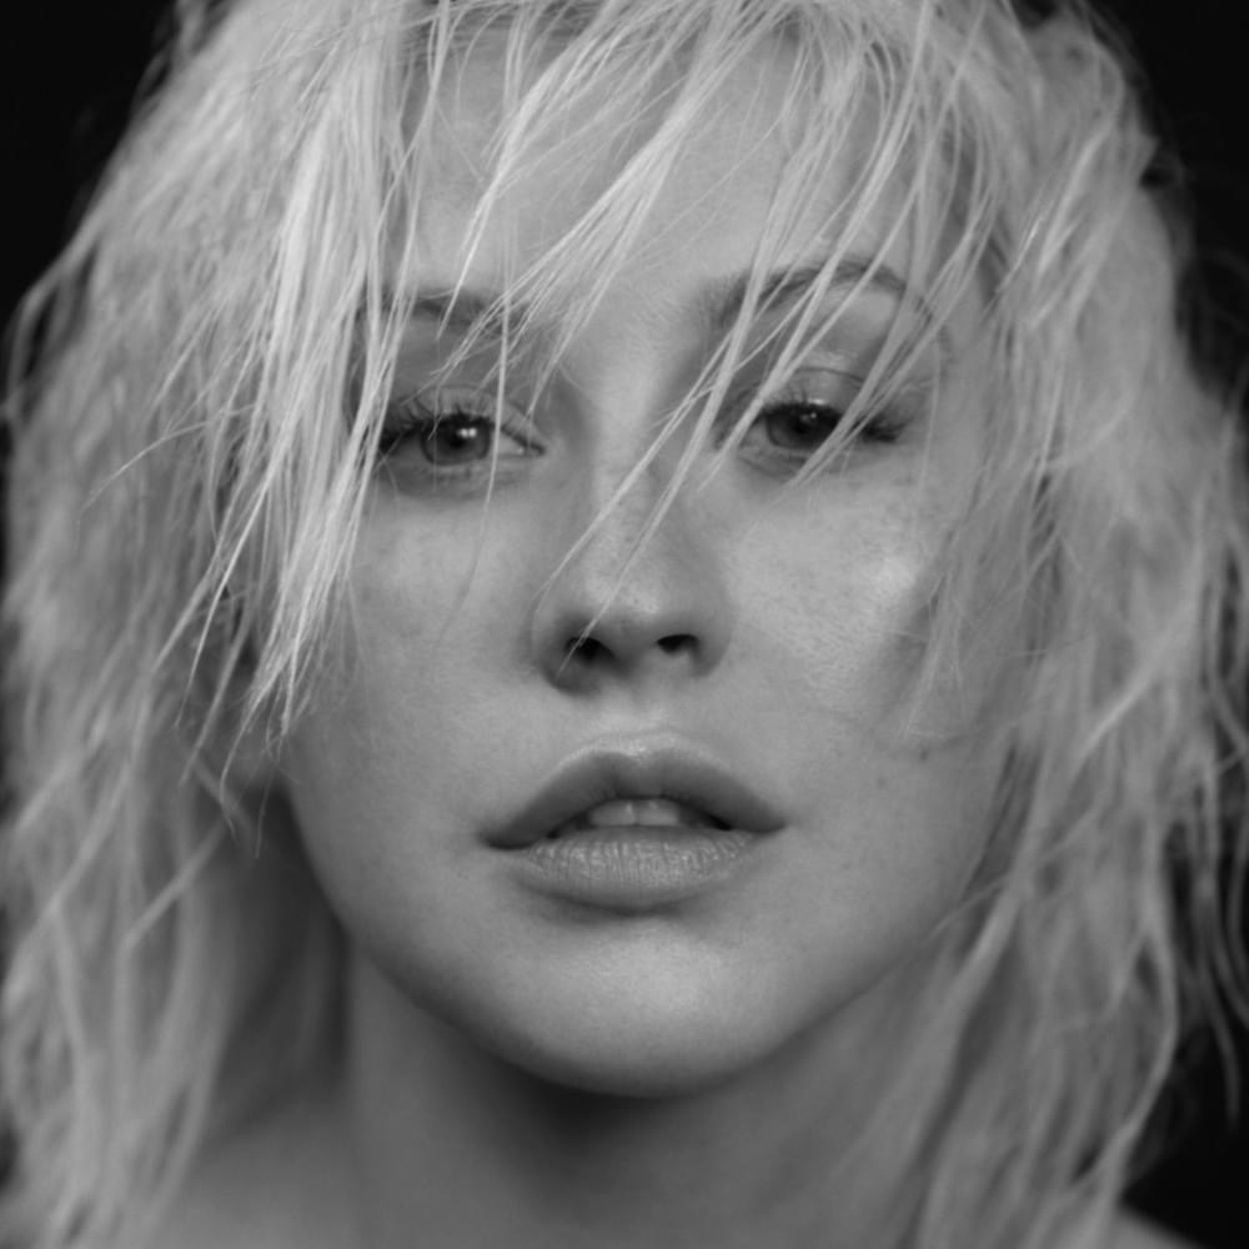 Christina Aguilera Shares New Kanye-Produced Song "Maria": Listen